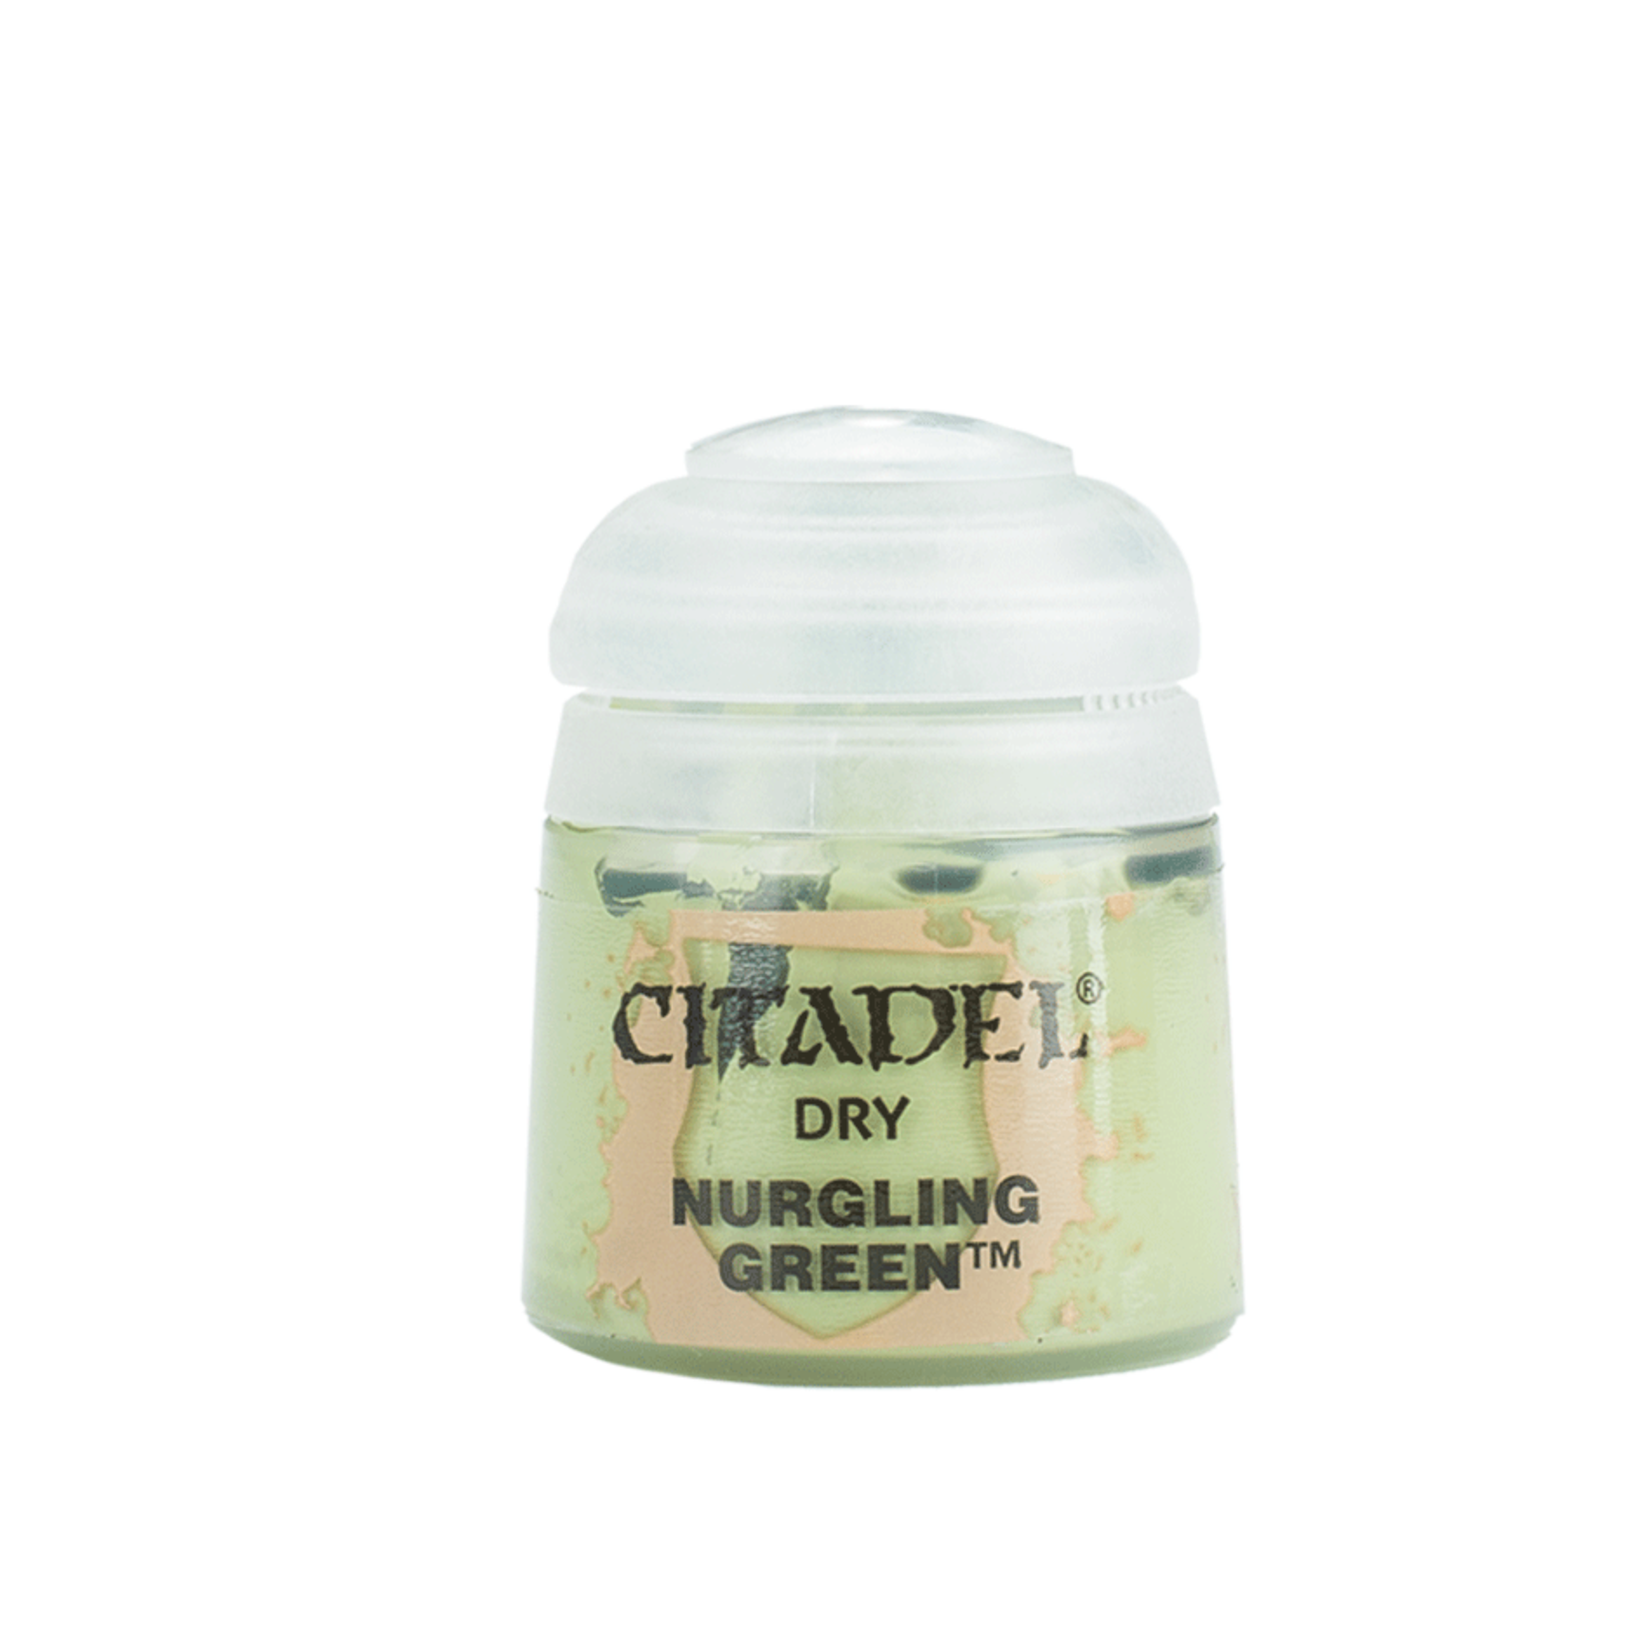 Citadel Dry Nurgling Green 12ml pot